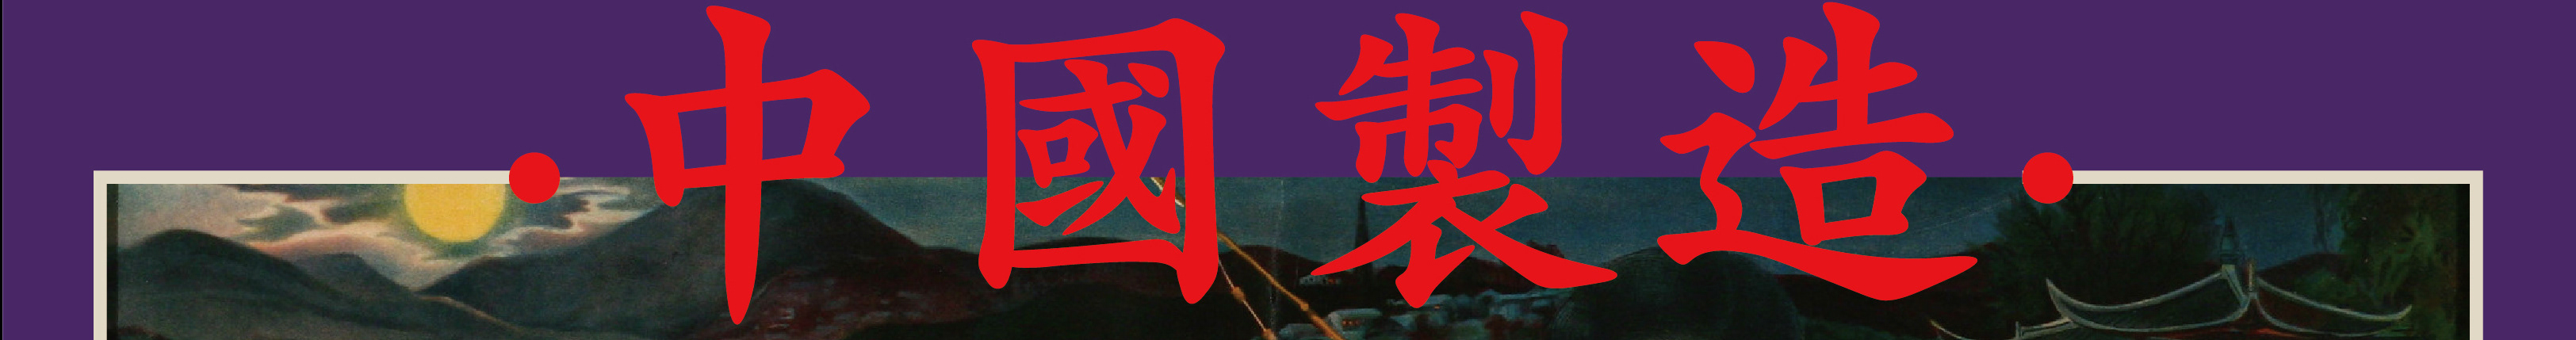 Banner de perfil de 毕 鑫